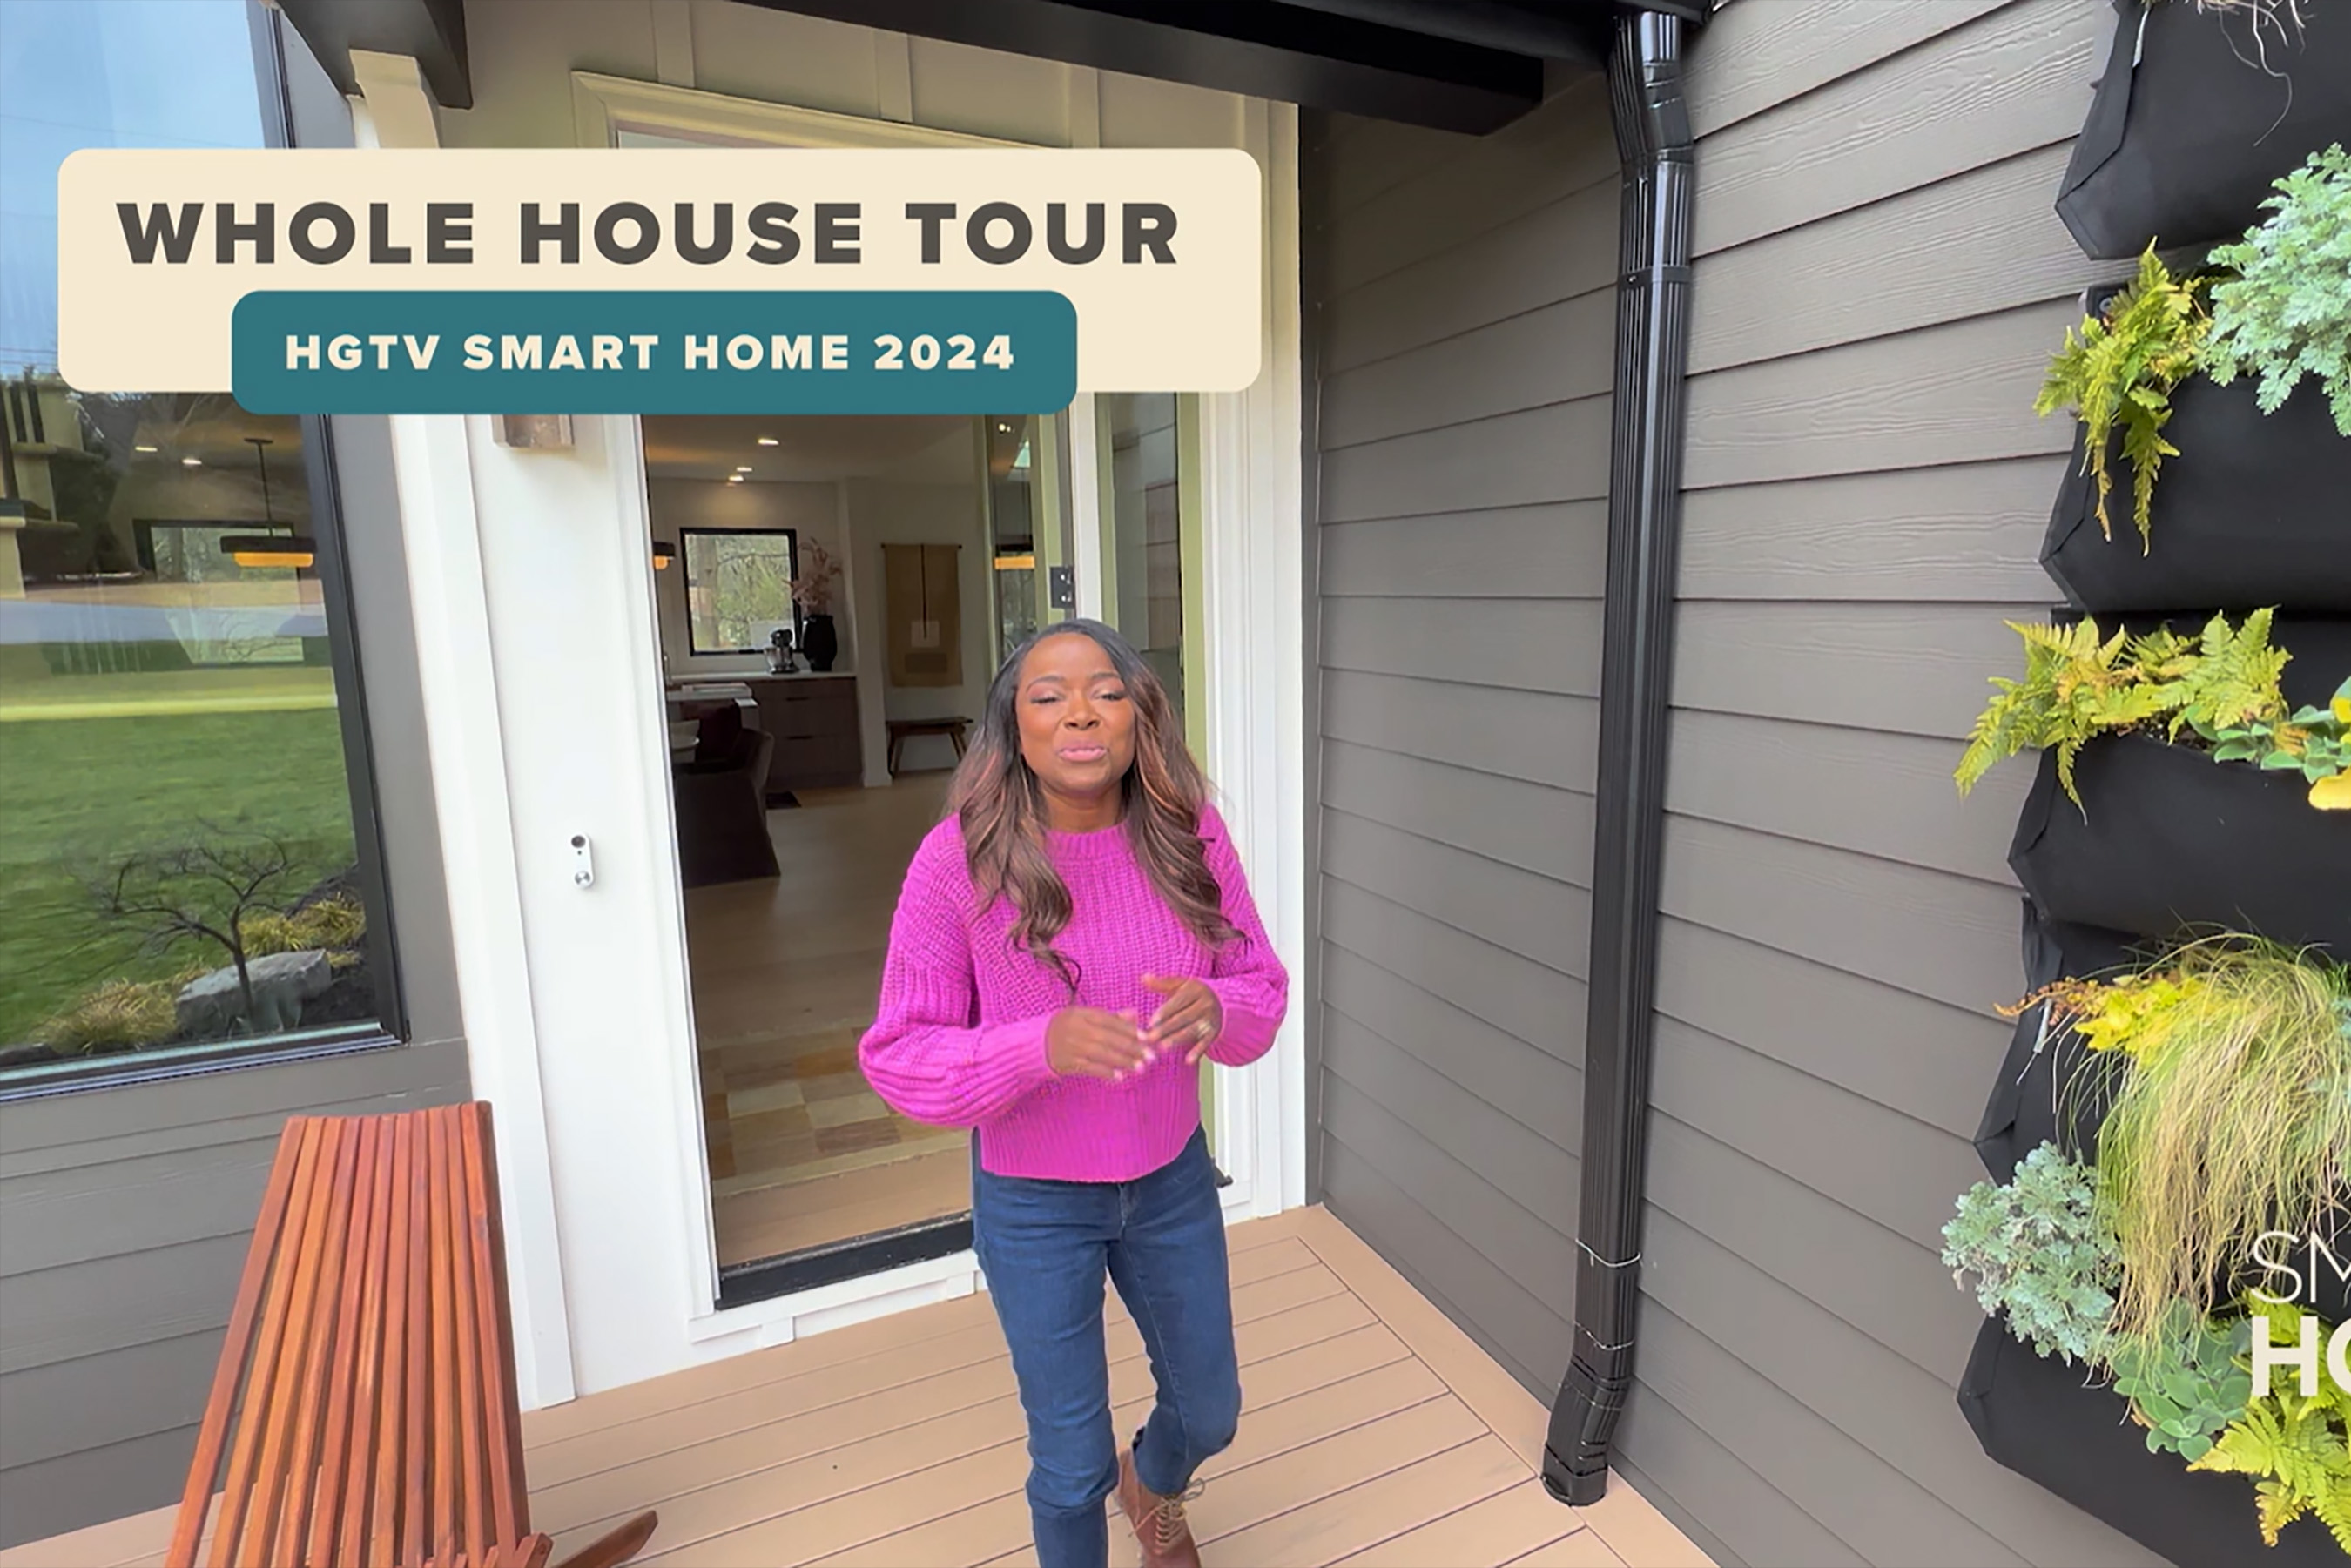 HGTV UNVEILS THE HGTV® SMART HOME 2024 IN ATLANTA, GEORGIA